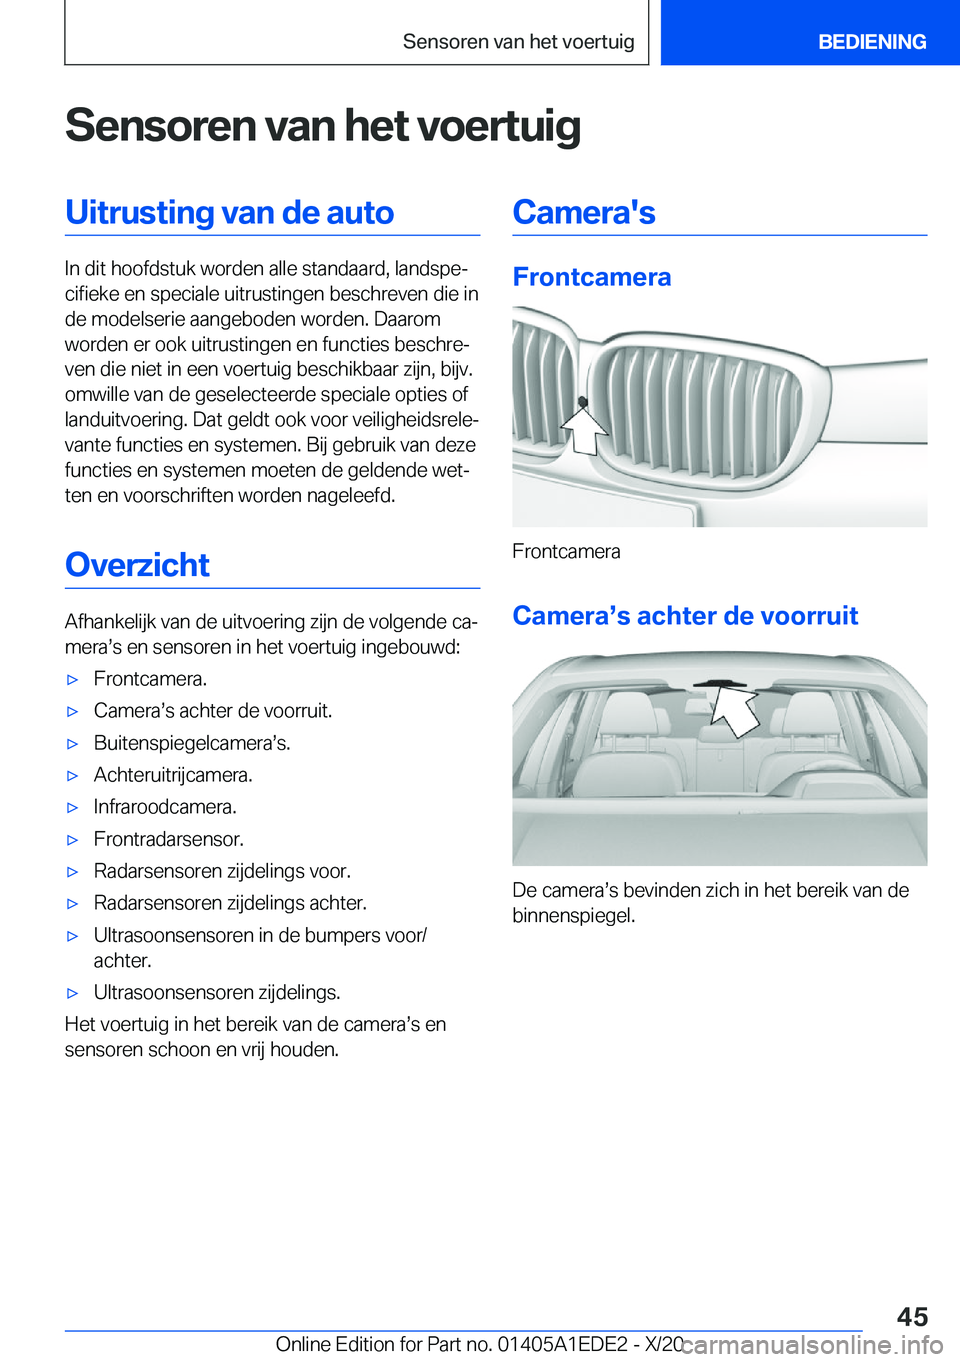 BMW 8 SERIES CONVERTIBLE 2021  Instructieboekjes (in Dutch) �S�e�n�s�o�r�e�n��v�a�n��h�e�t��v�o�e�r�t�u�i�g�U�i�t�r�u�s�t�i�n�g��v�a�n��d�e��a�u�t�o
�I�n��d�i�t��h�o�o�f�d�s�t�u�k��w�o�r�d�e�n��a�l�l�e��s�t�a�n�d�a�a�r�d�,��l�a�n�d�s�p�ej�c�i�f�i�